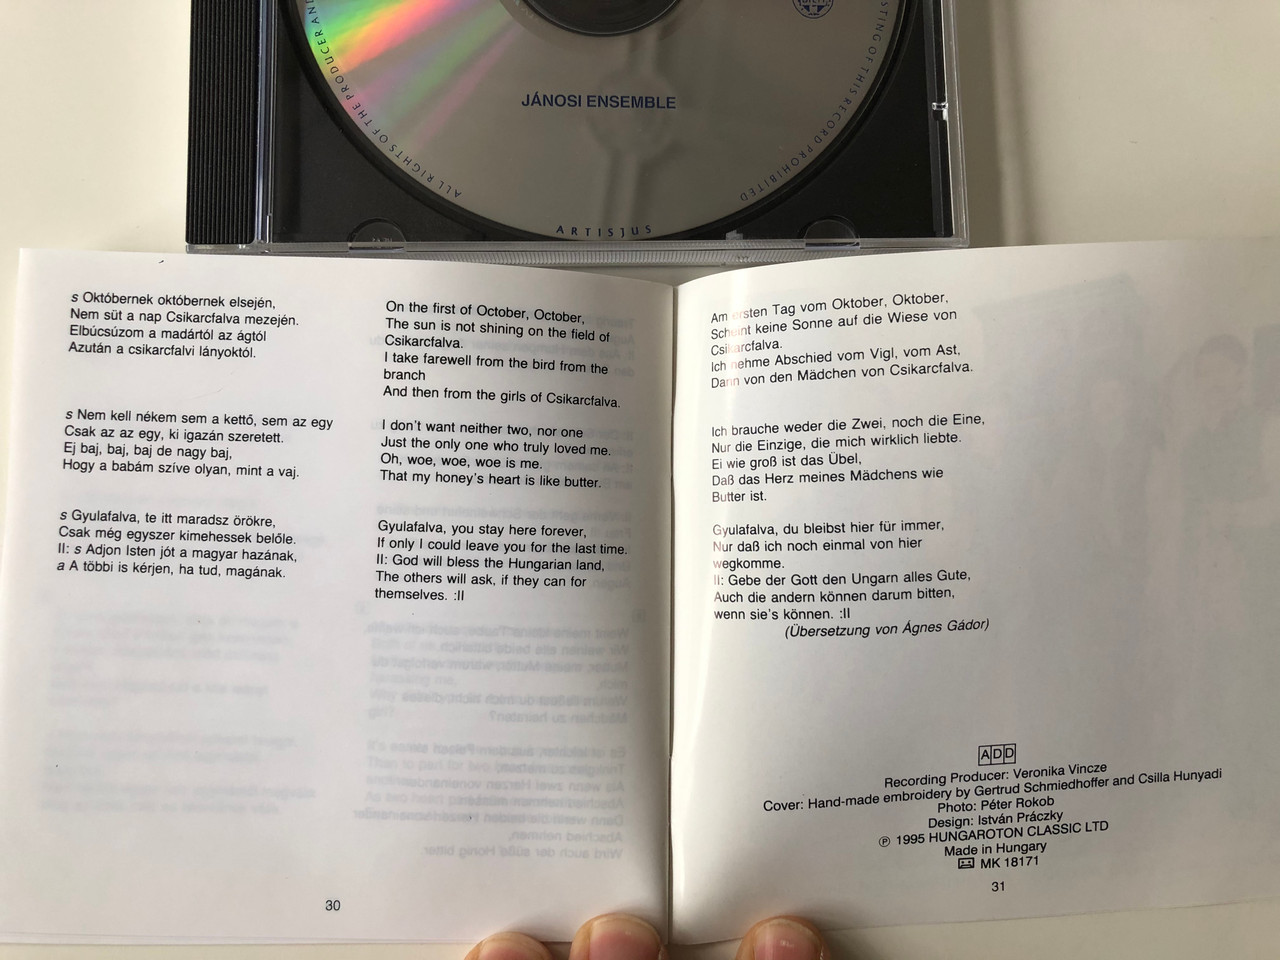 Jánosi Ensemble ‎– Rhapsody: Liszt & Bartók Sources / Hungaroton ‎Classic  Audio CD 1994 Stereo / HCD 18191 - bibleinmylanguage